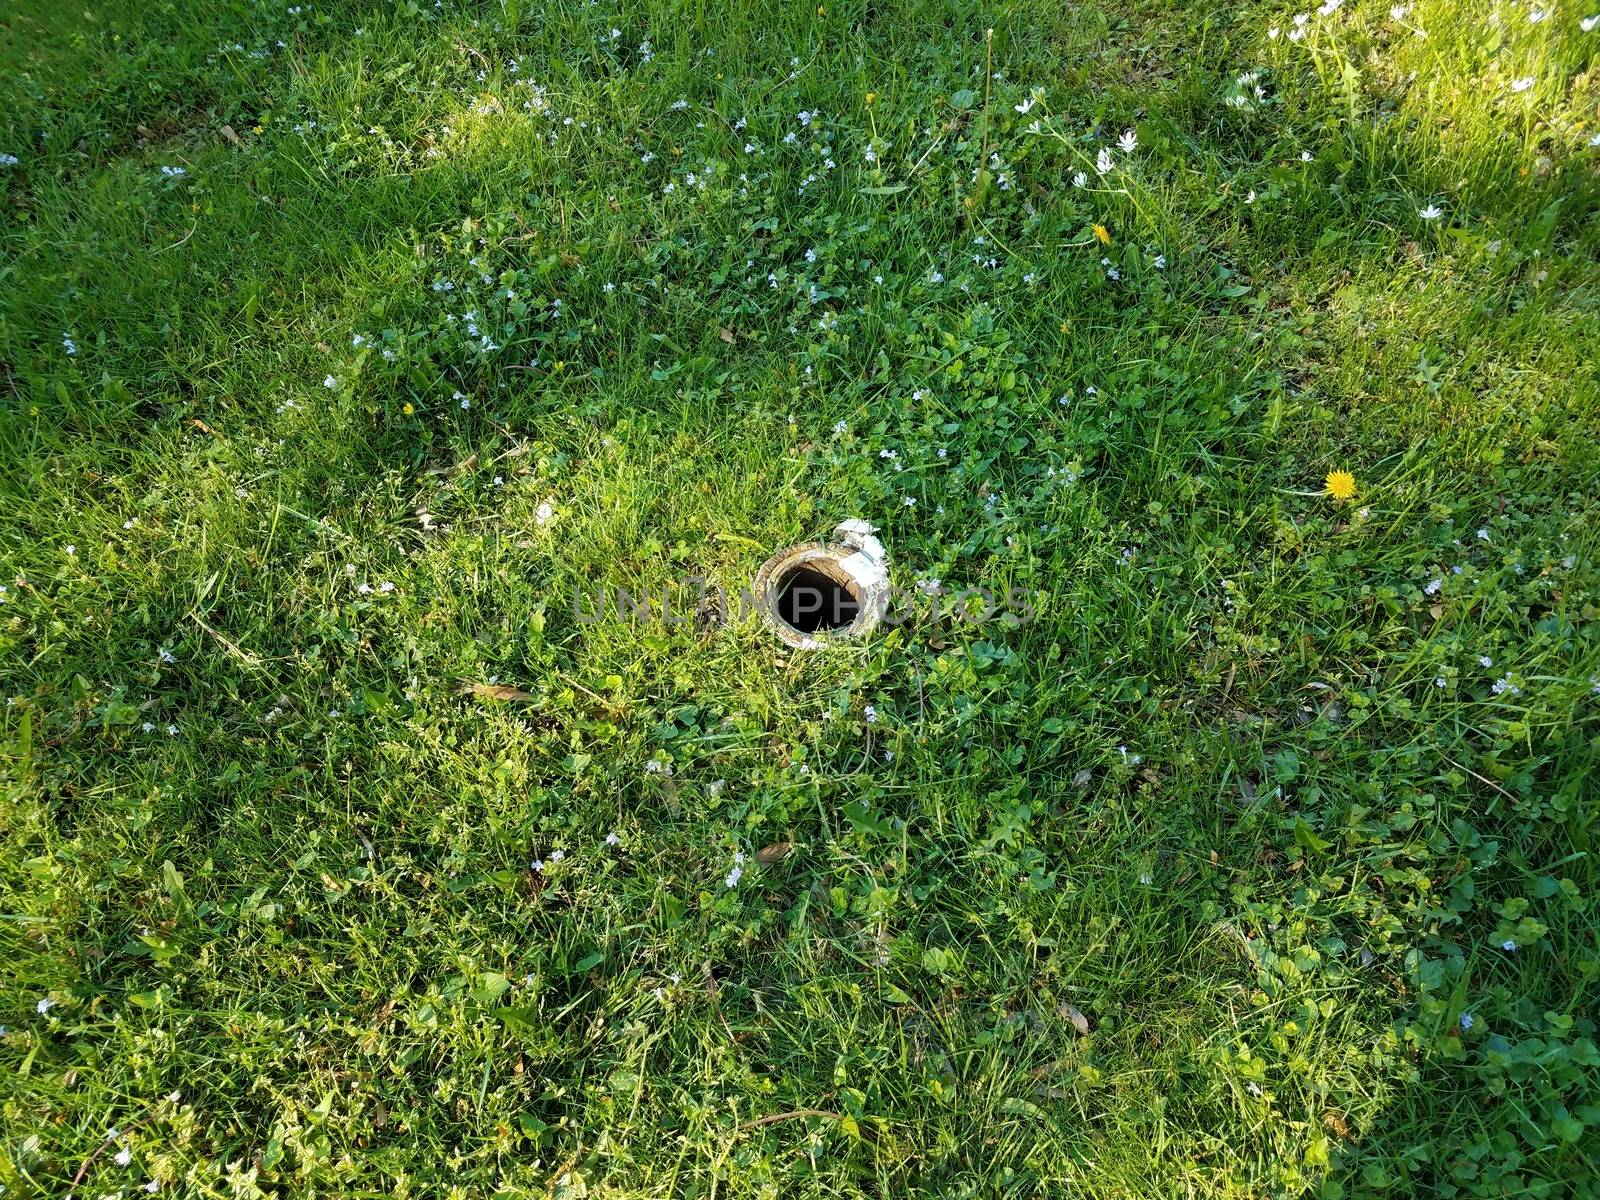 hole in metal pipe plumbing in green grass or lawn